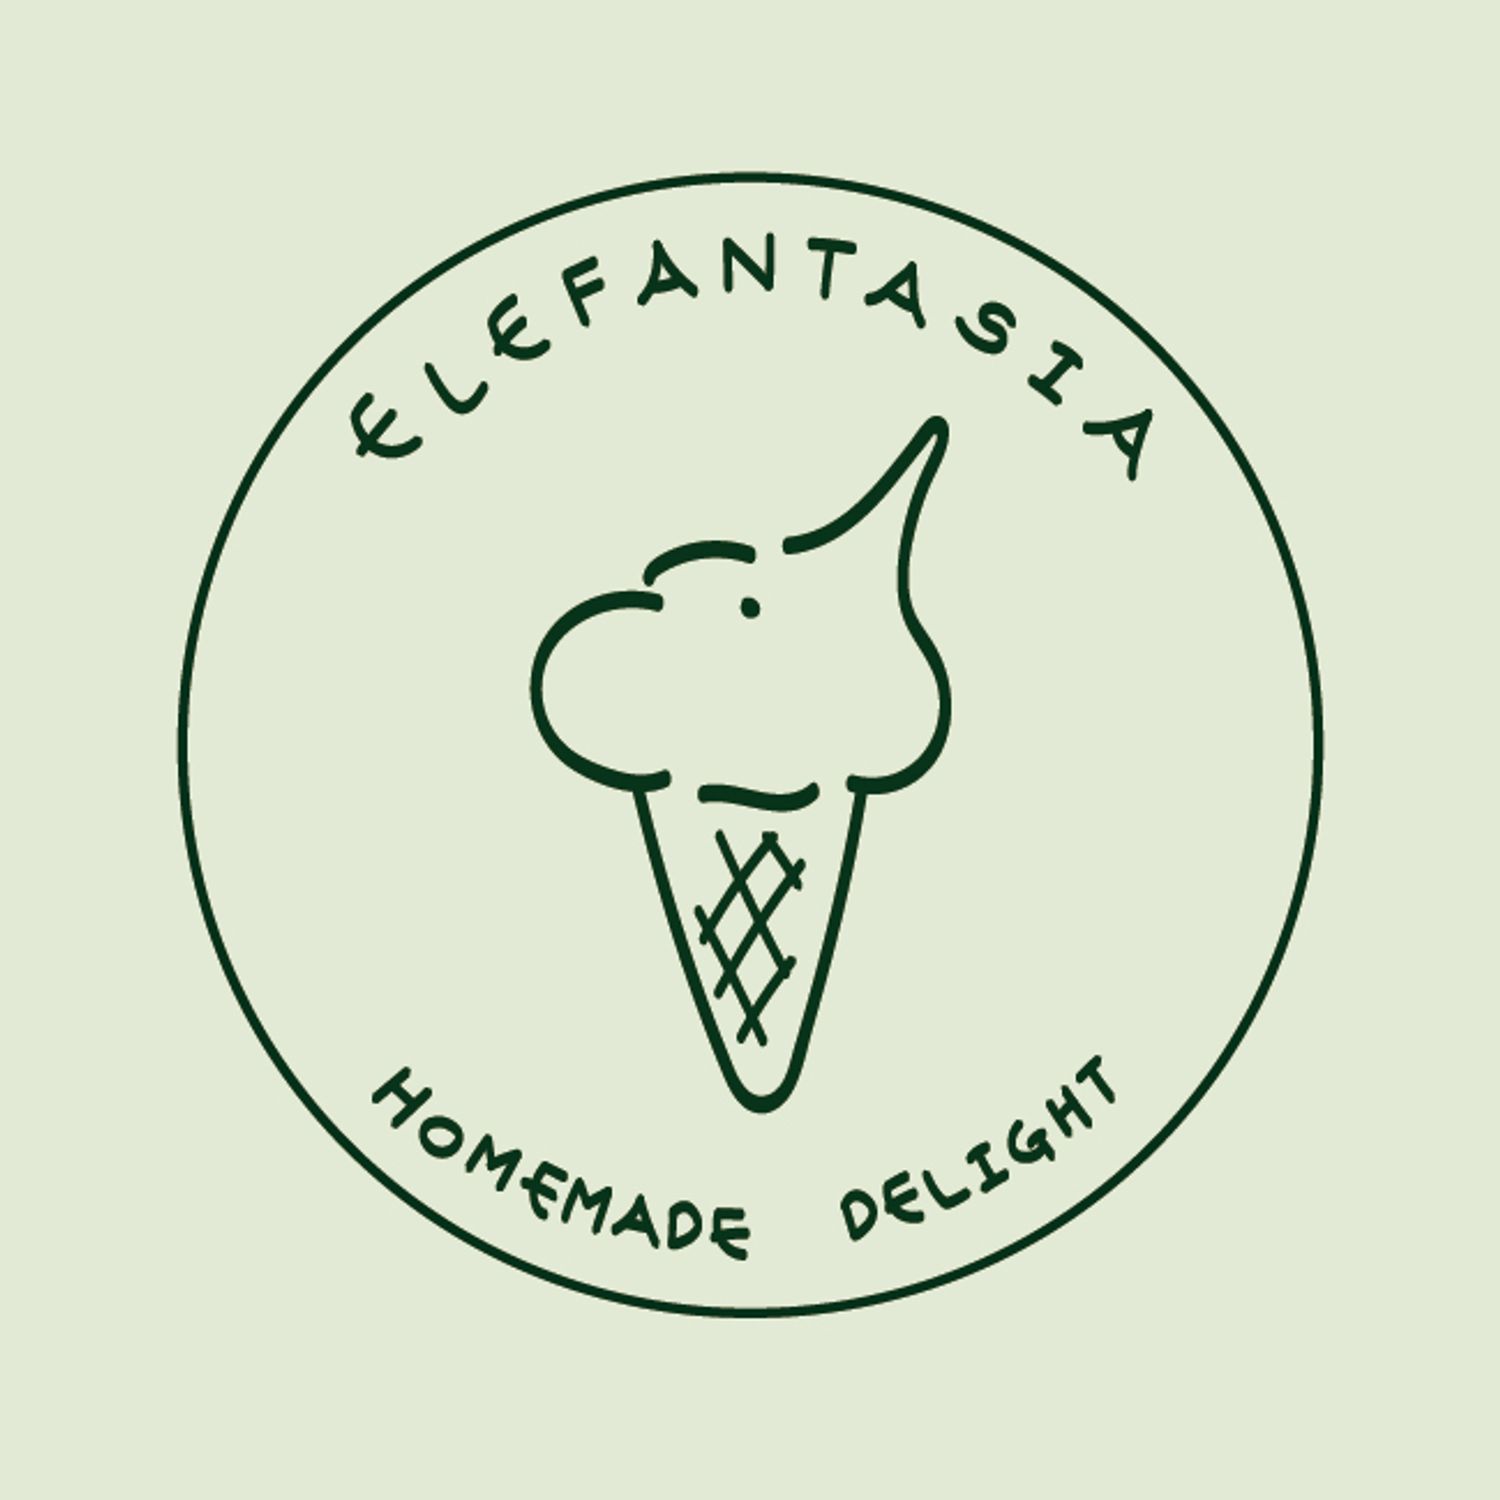 Elefantasia Homemade Delight愛、樂分享冰淇淋 - Elefantasia Homemade Delight 愛、樂分享冰淇淋